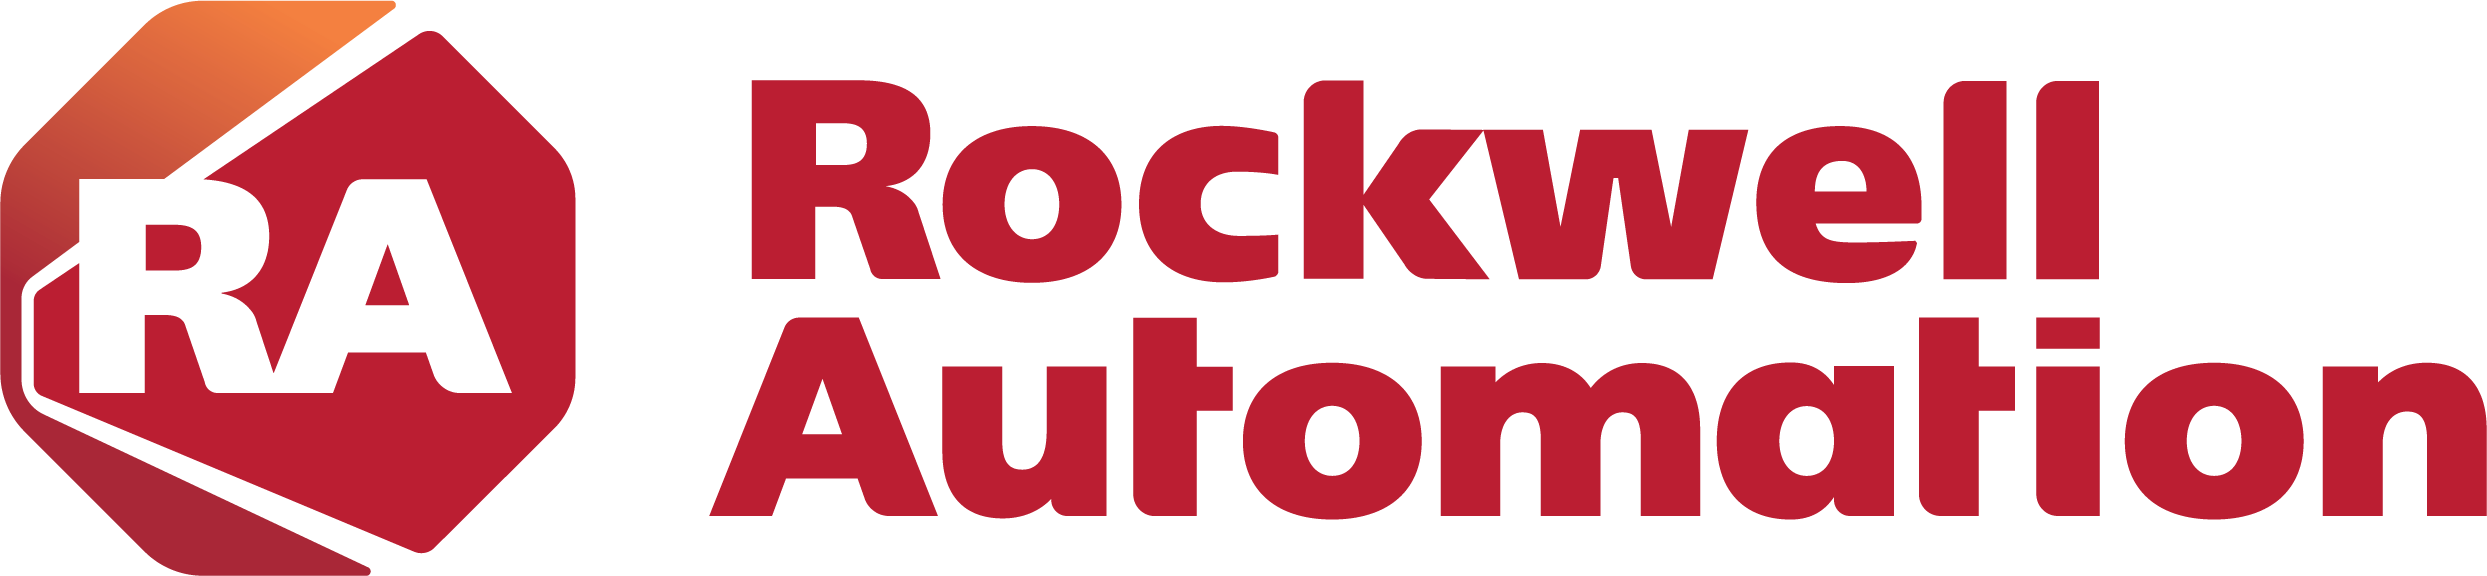 Rockwell_Automation_Logo-3603937243